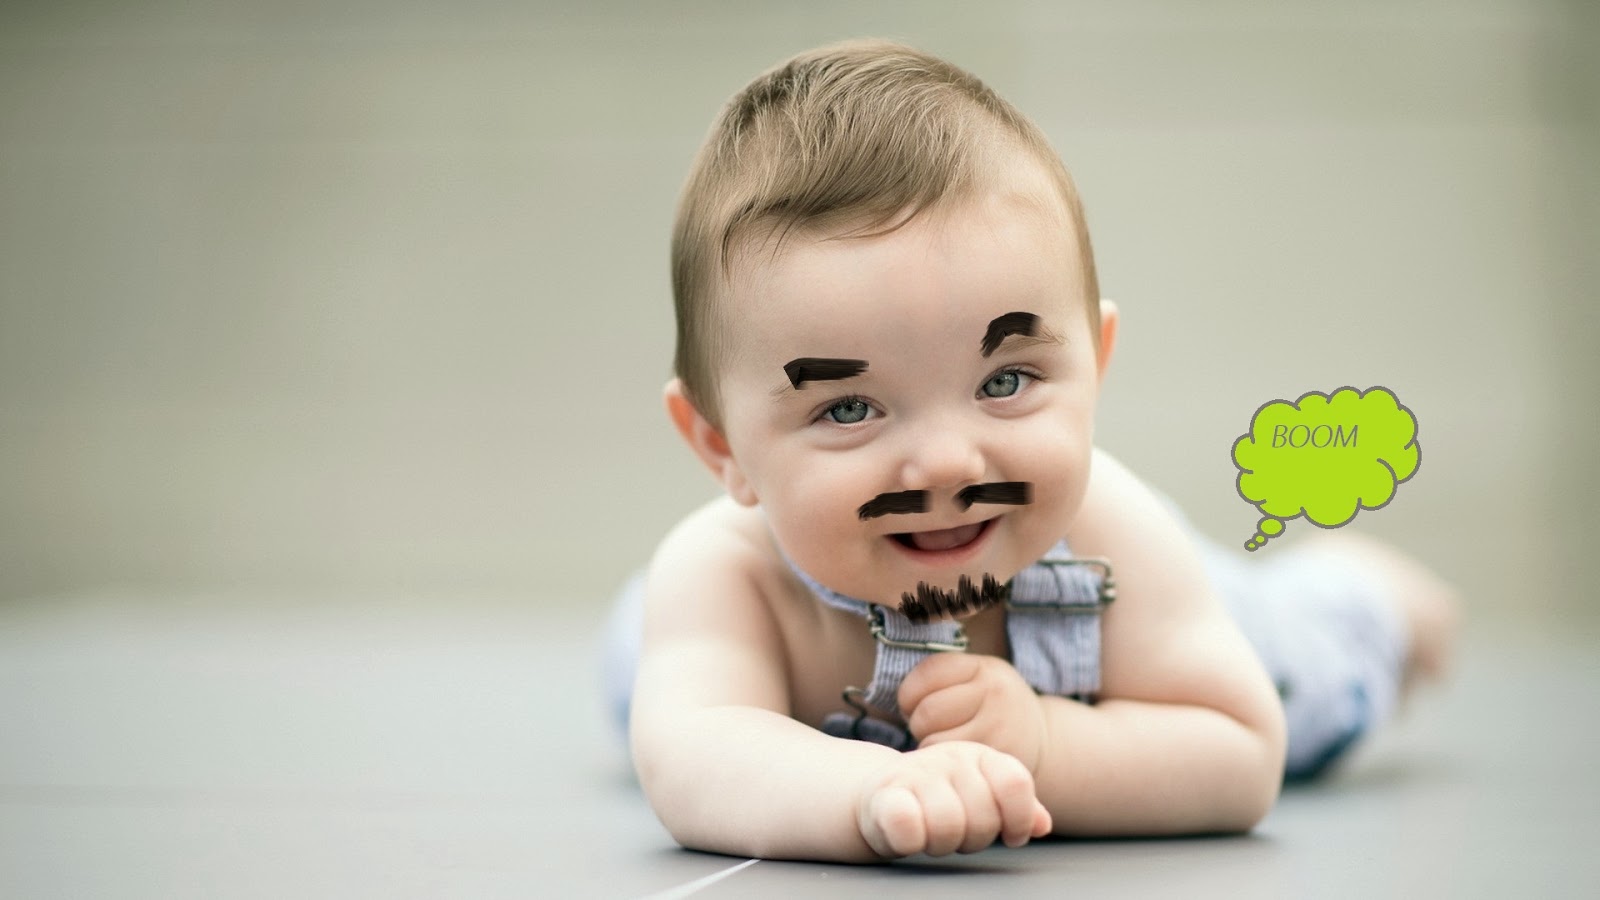 Kumpulan gambar bayi  Lucu Imut Funny and Cute baby images